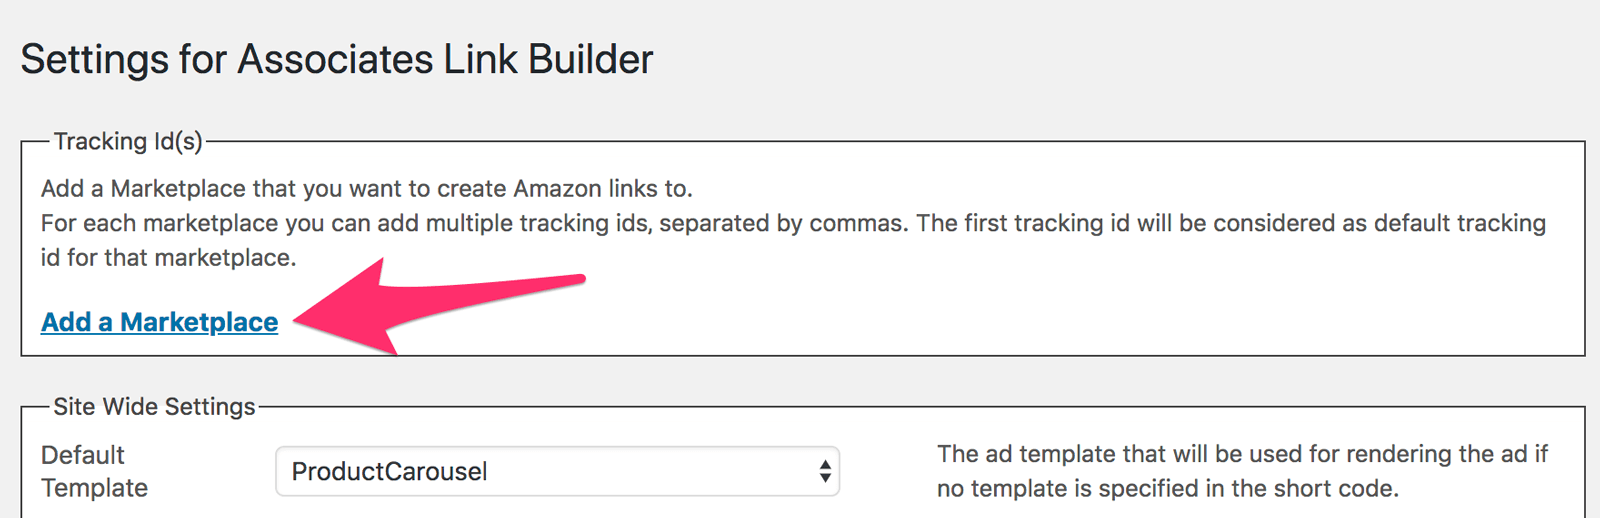 Amazon Associates Link Builderで使う国とトラッキングIDの設定